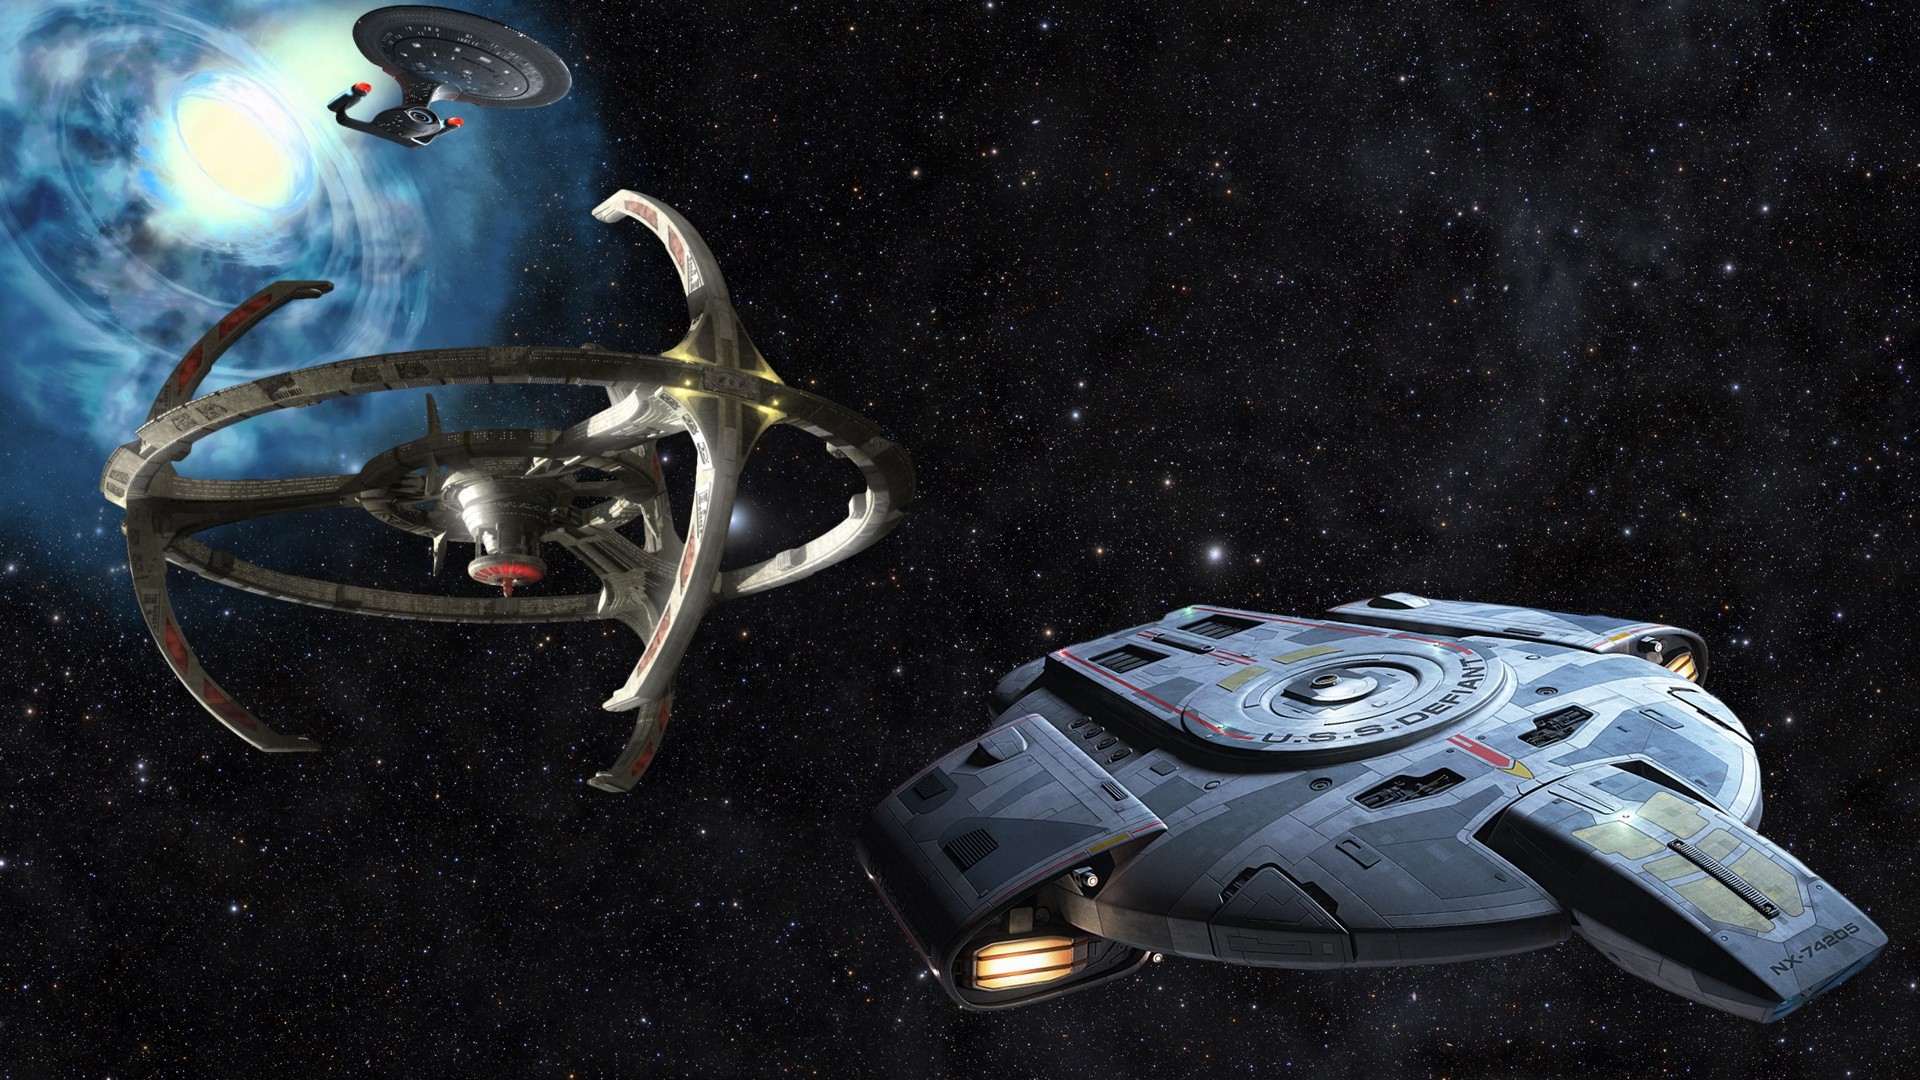 Star Trek Space Station USS Defiant 1920x1080